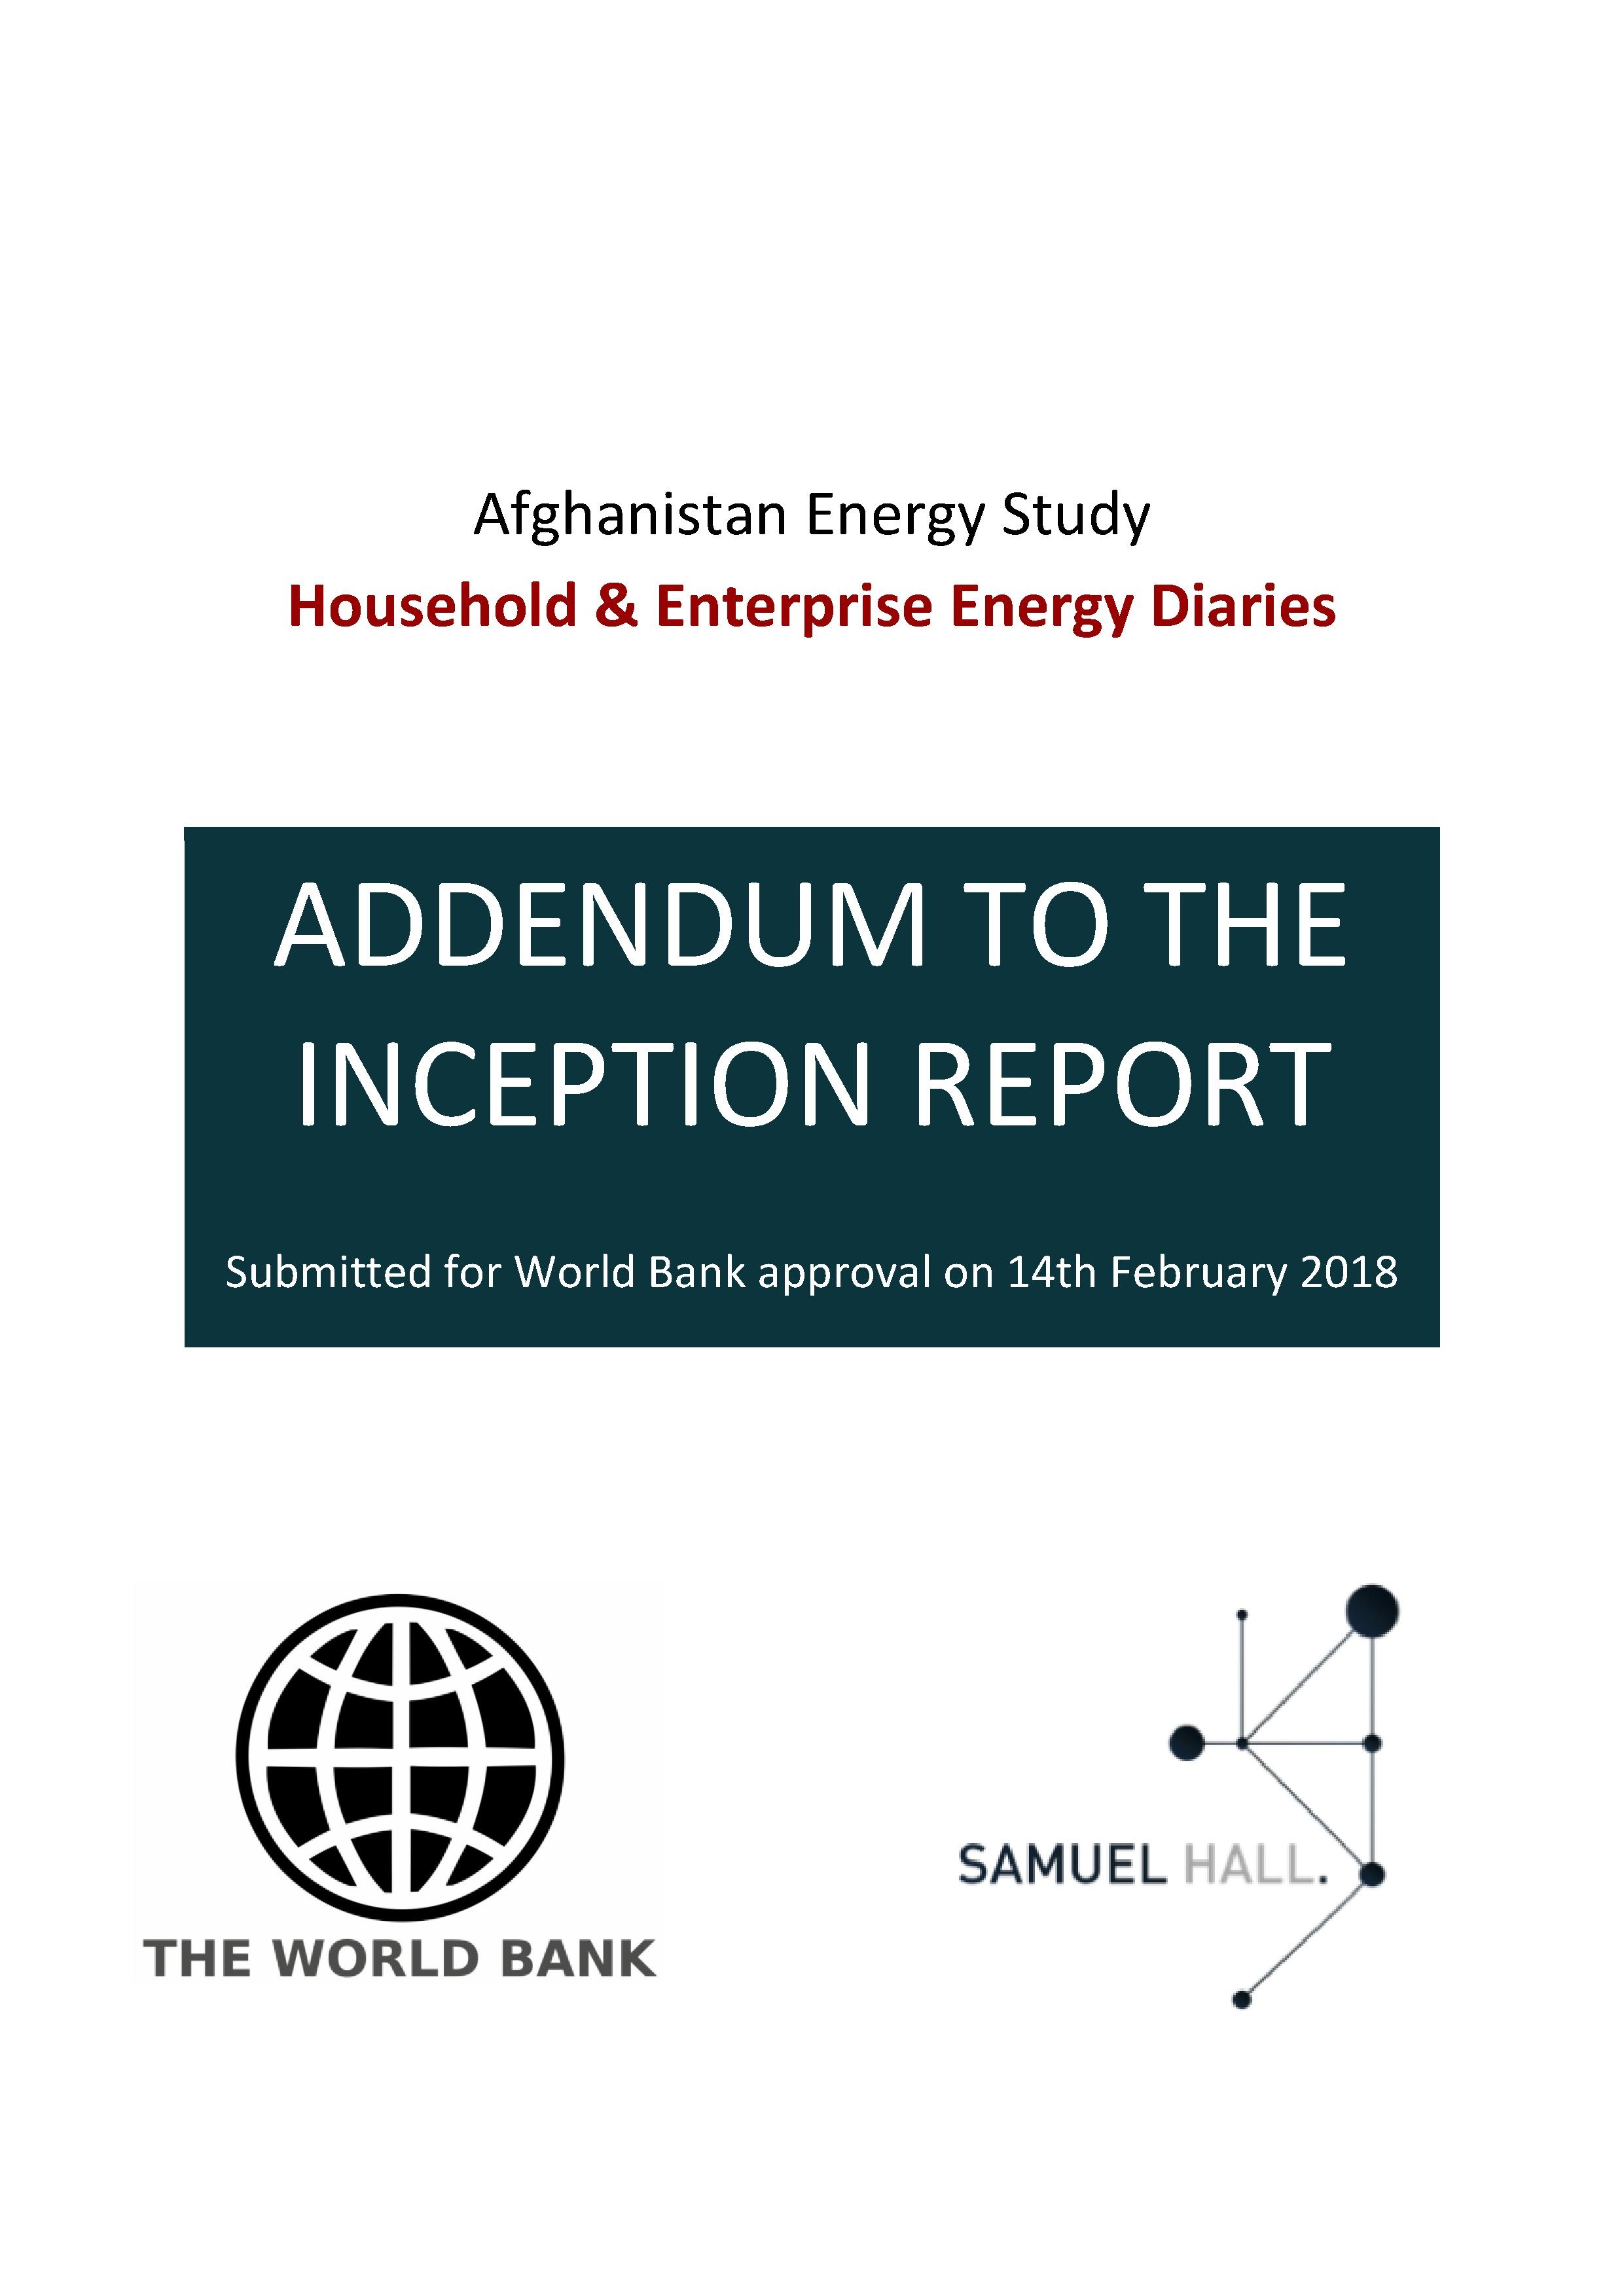 Inception report addendum